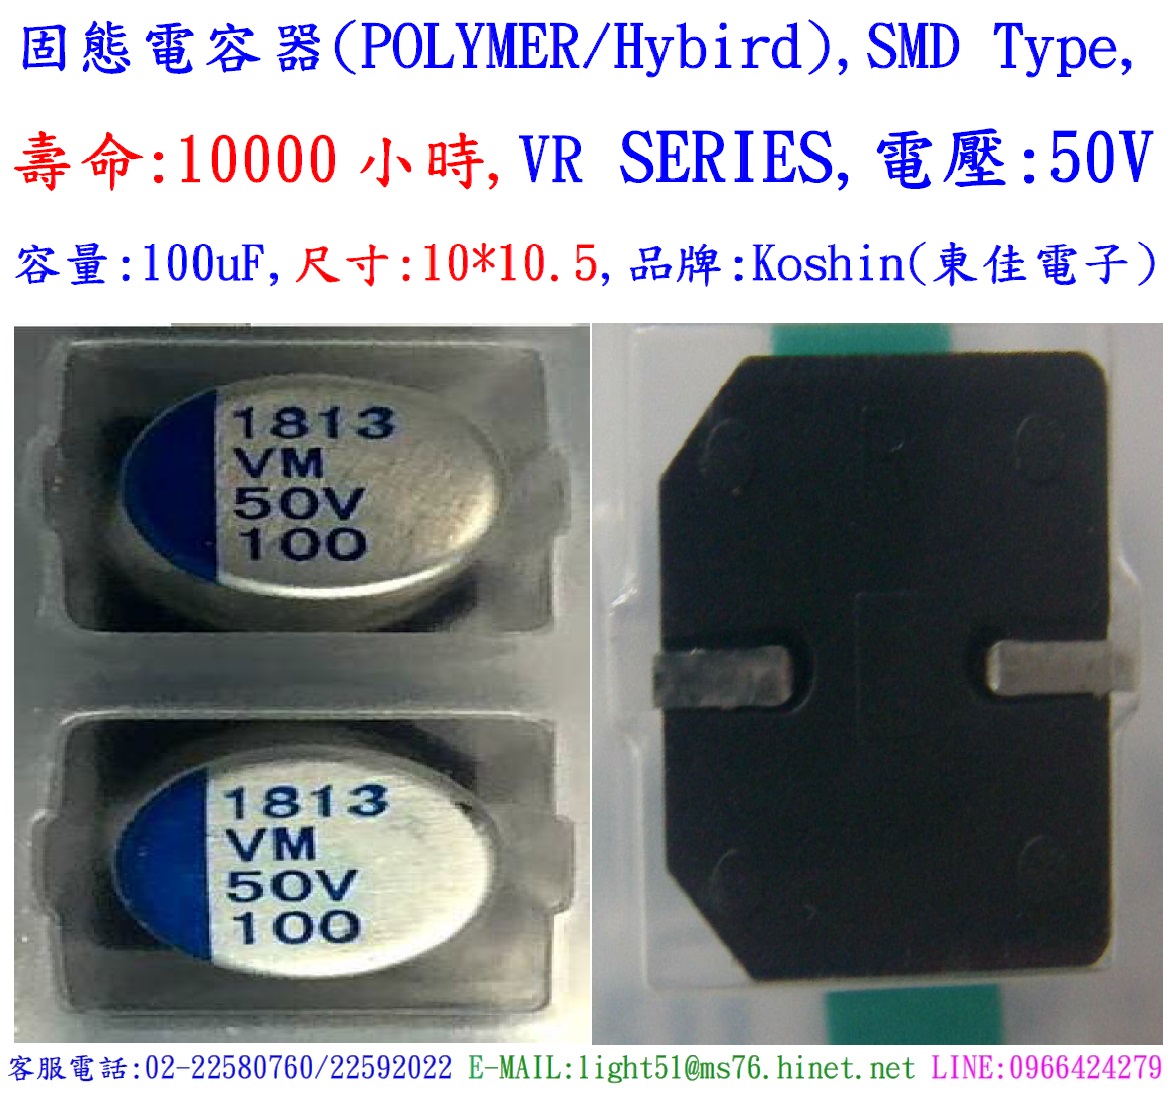 VM,50V,100uF,尺寸:10X10.5,固態電容器(POLYMER/Hybird),壽命10000小時,KOSHIN(東佳)